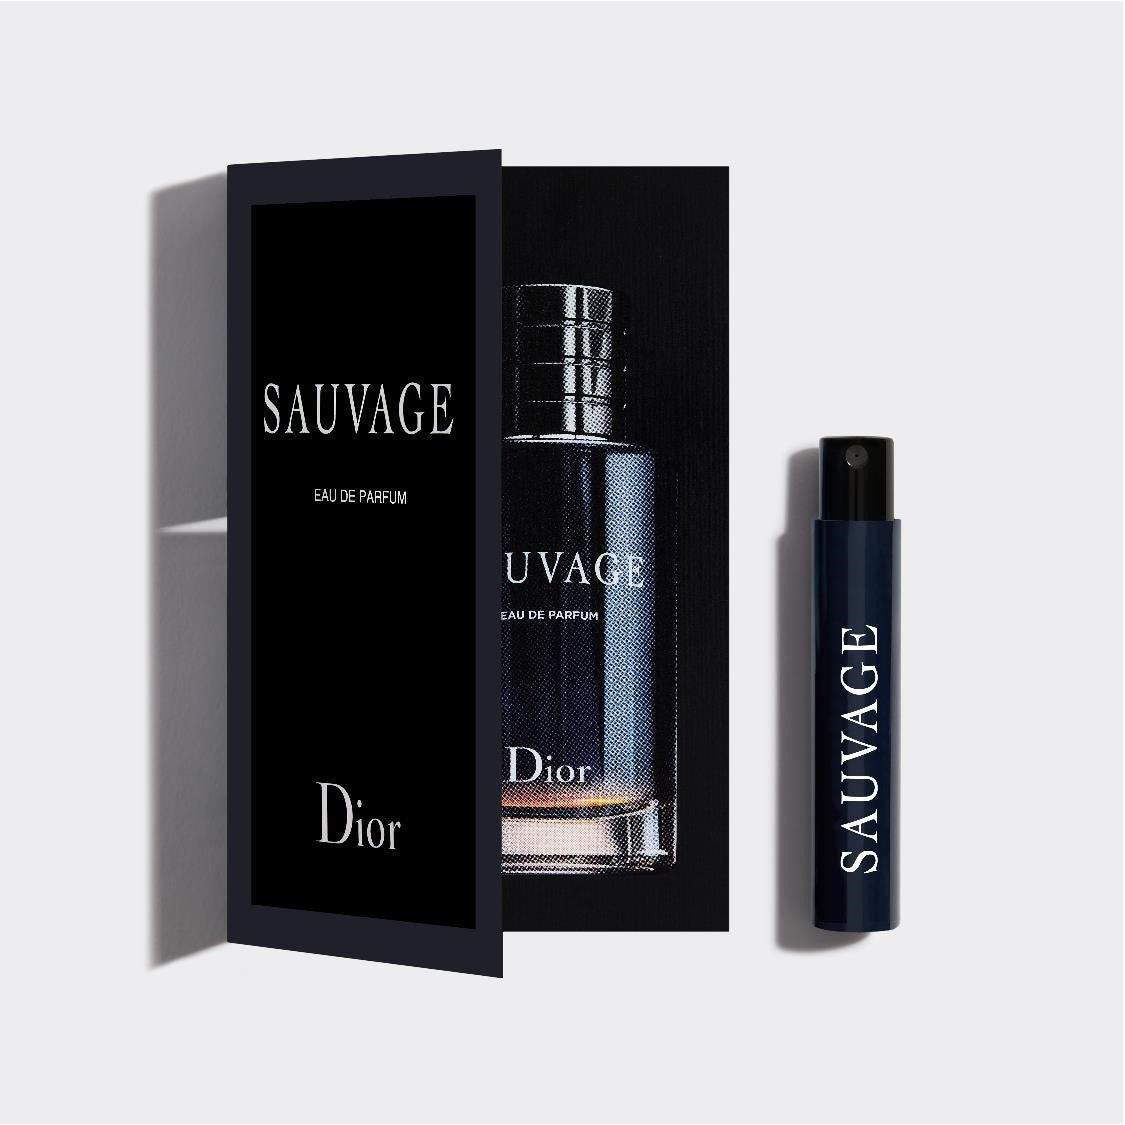 Sauvage Eau de parfum - Try it First 1ml - Sample